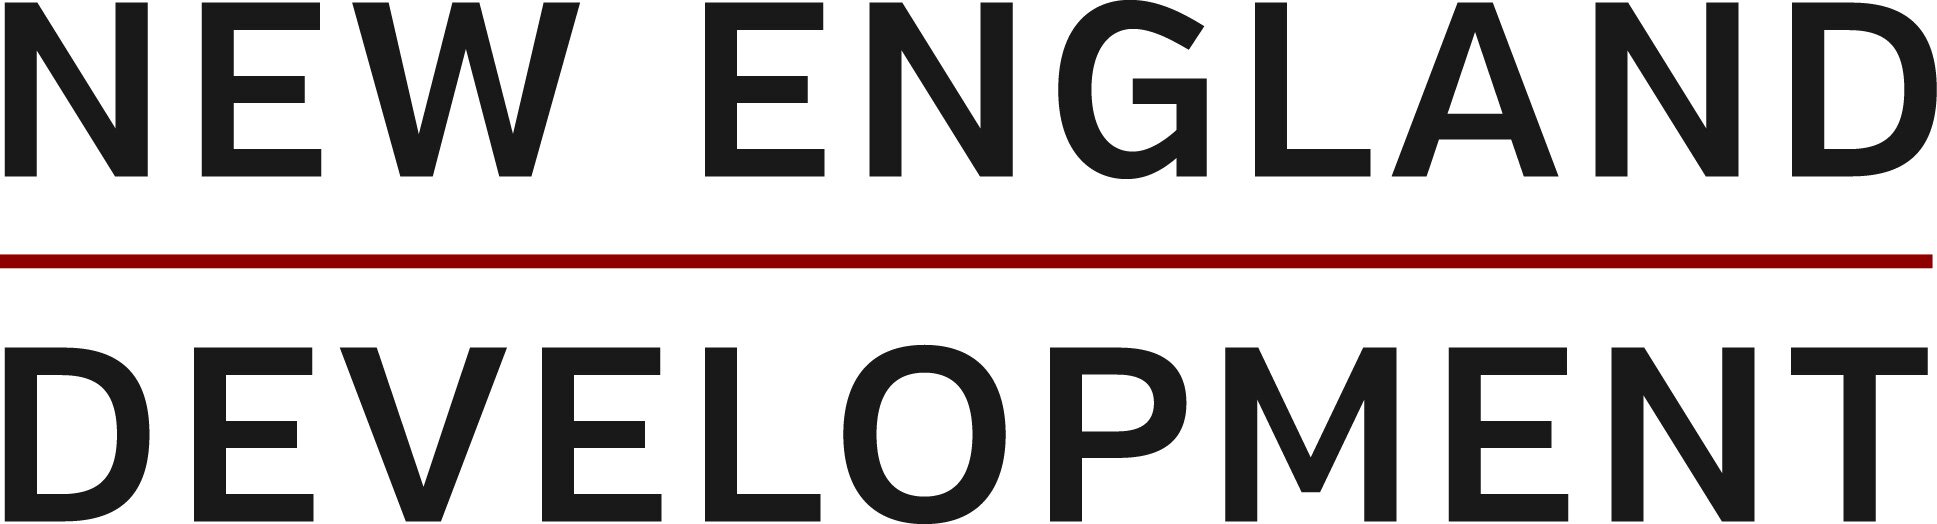 New-England-Development-Logo-1.jpg